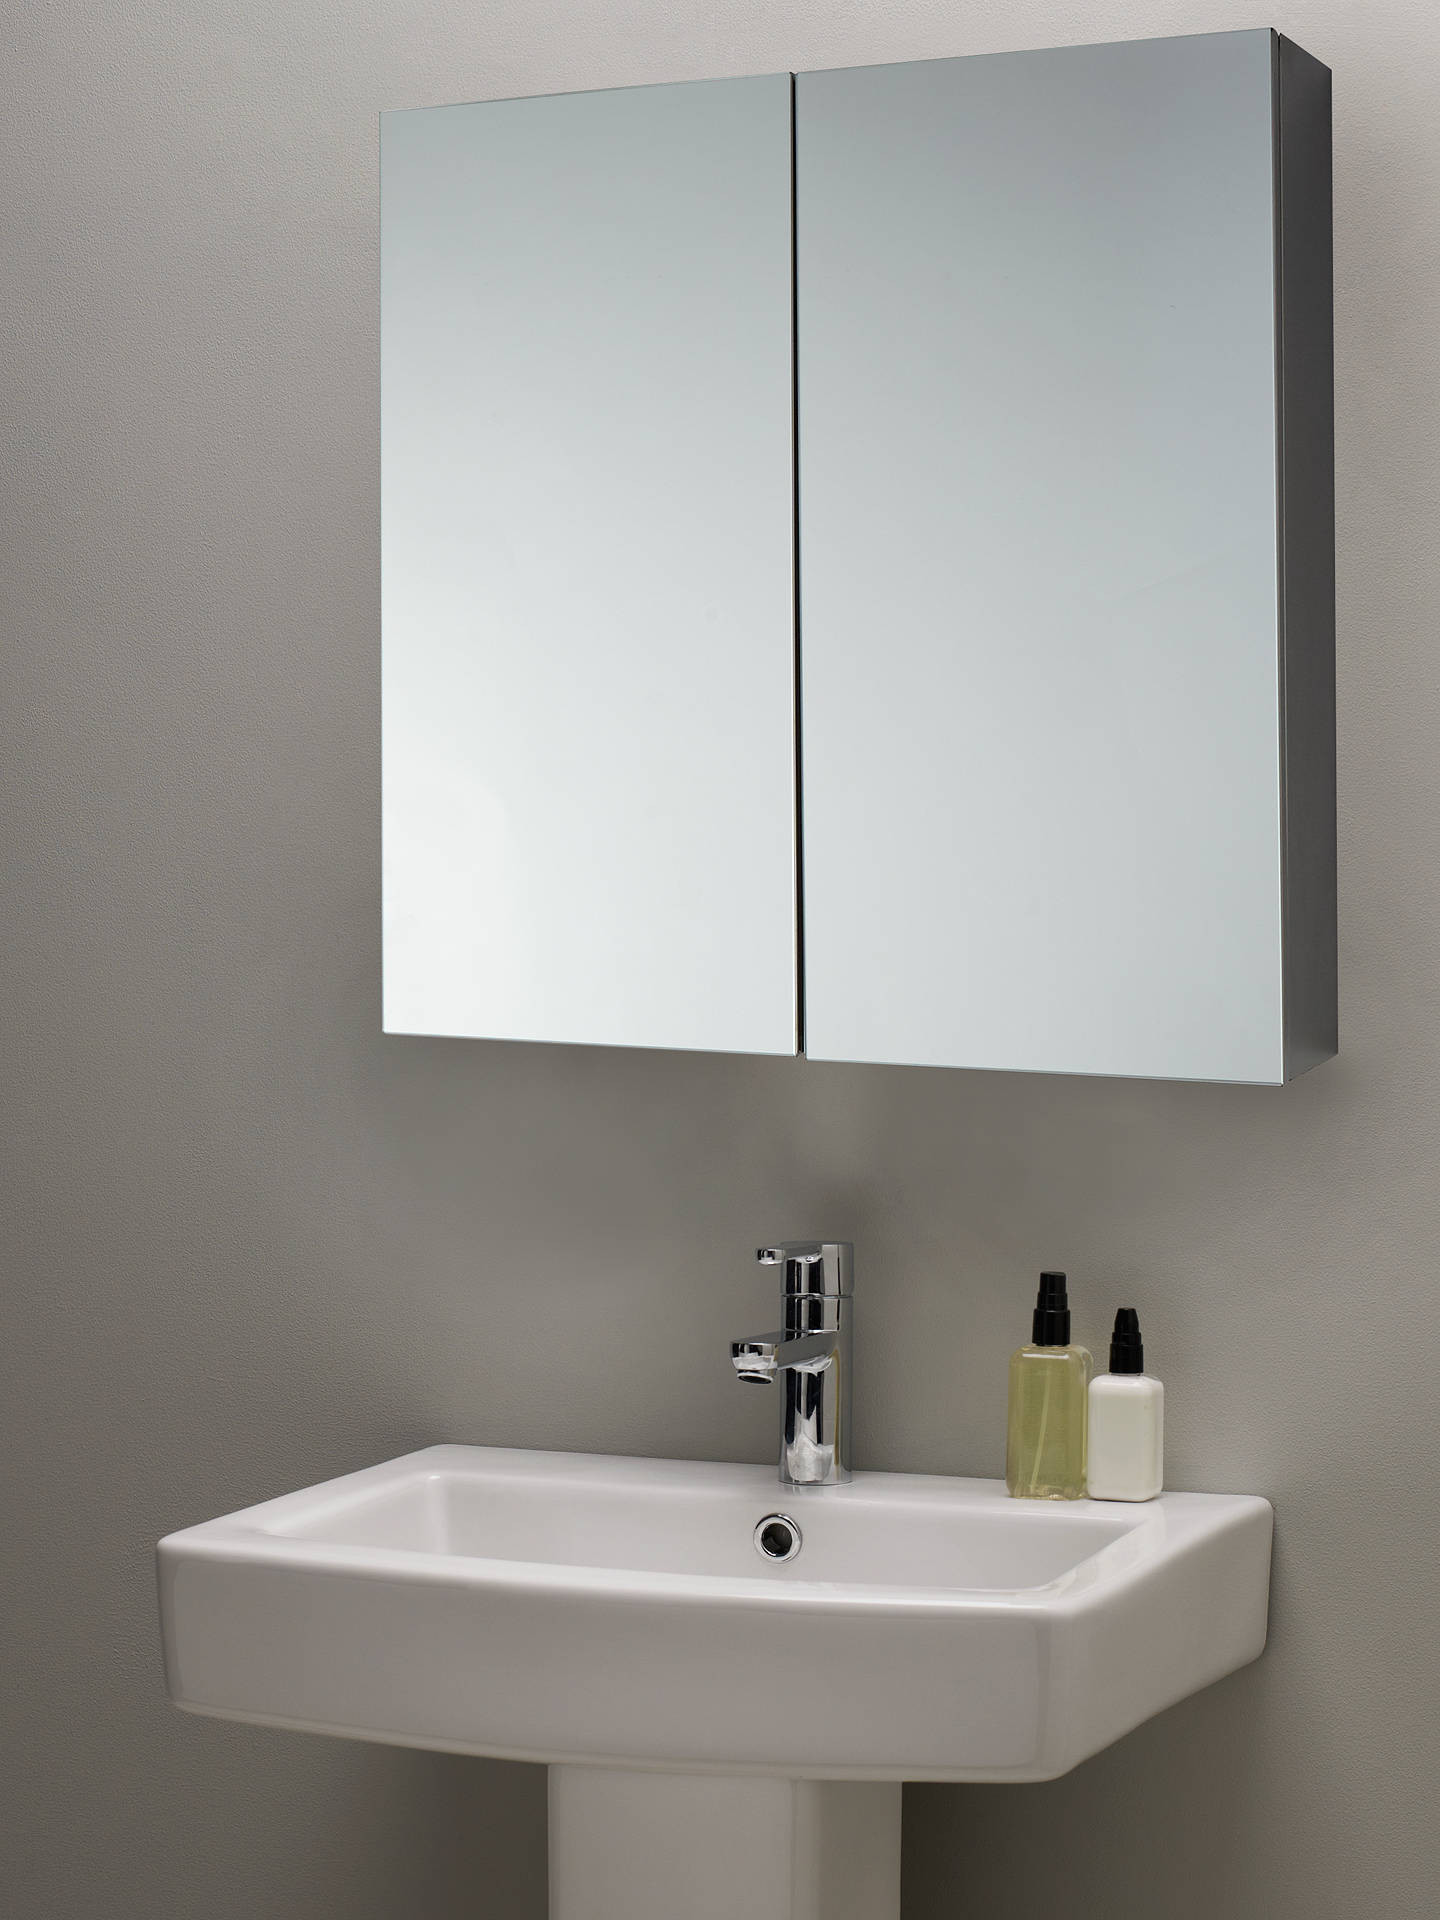 Mirror Bathroom Cabinet
 John Lewis & Partners Double Mirrored Bathroom Cabinet